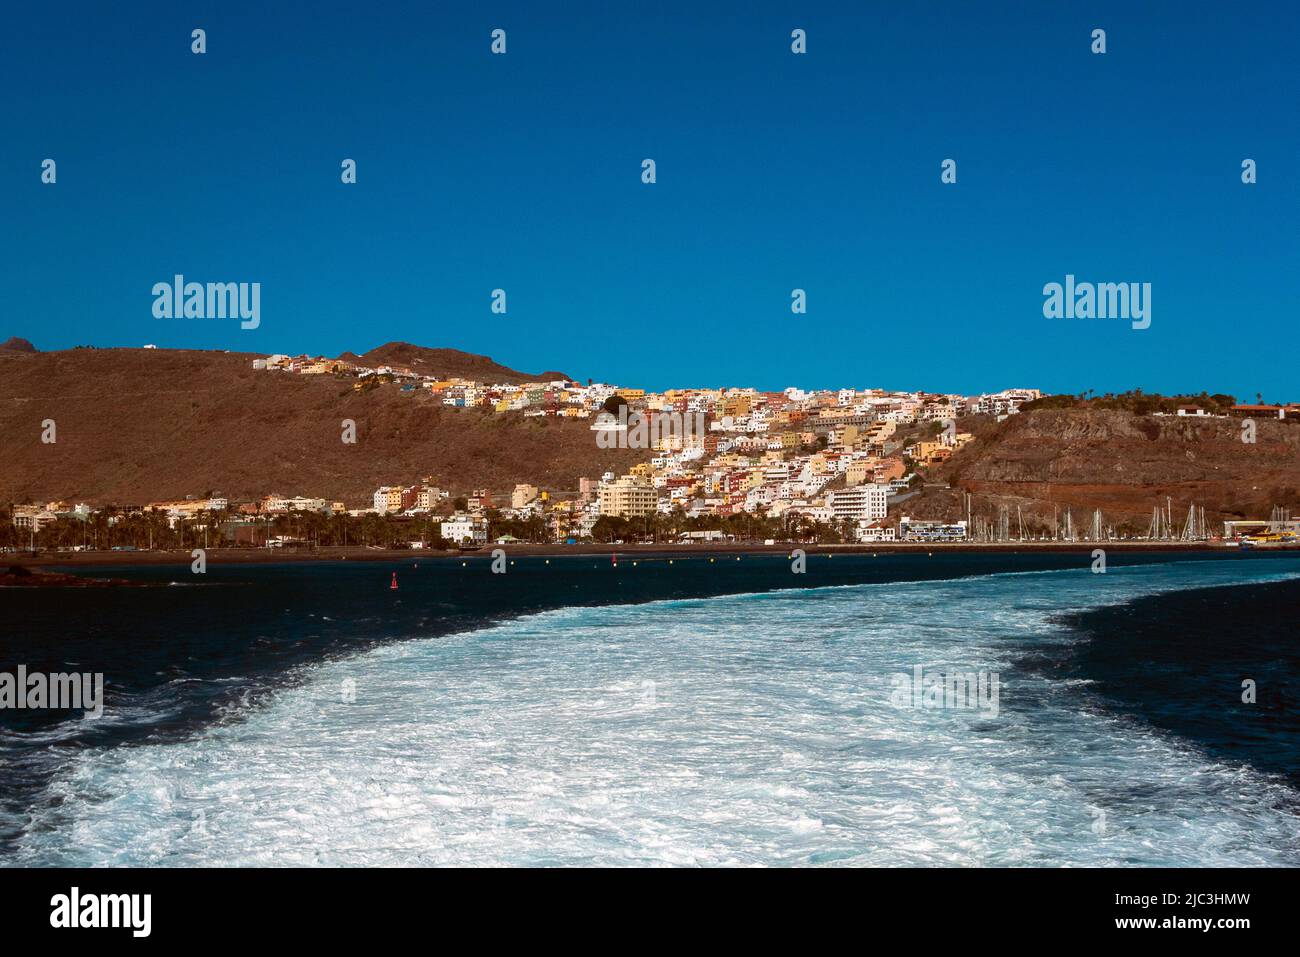 San Sebastian, La Gomera, Canary Islands: panoramic view of the city from the sea Stock Photo